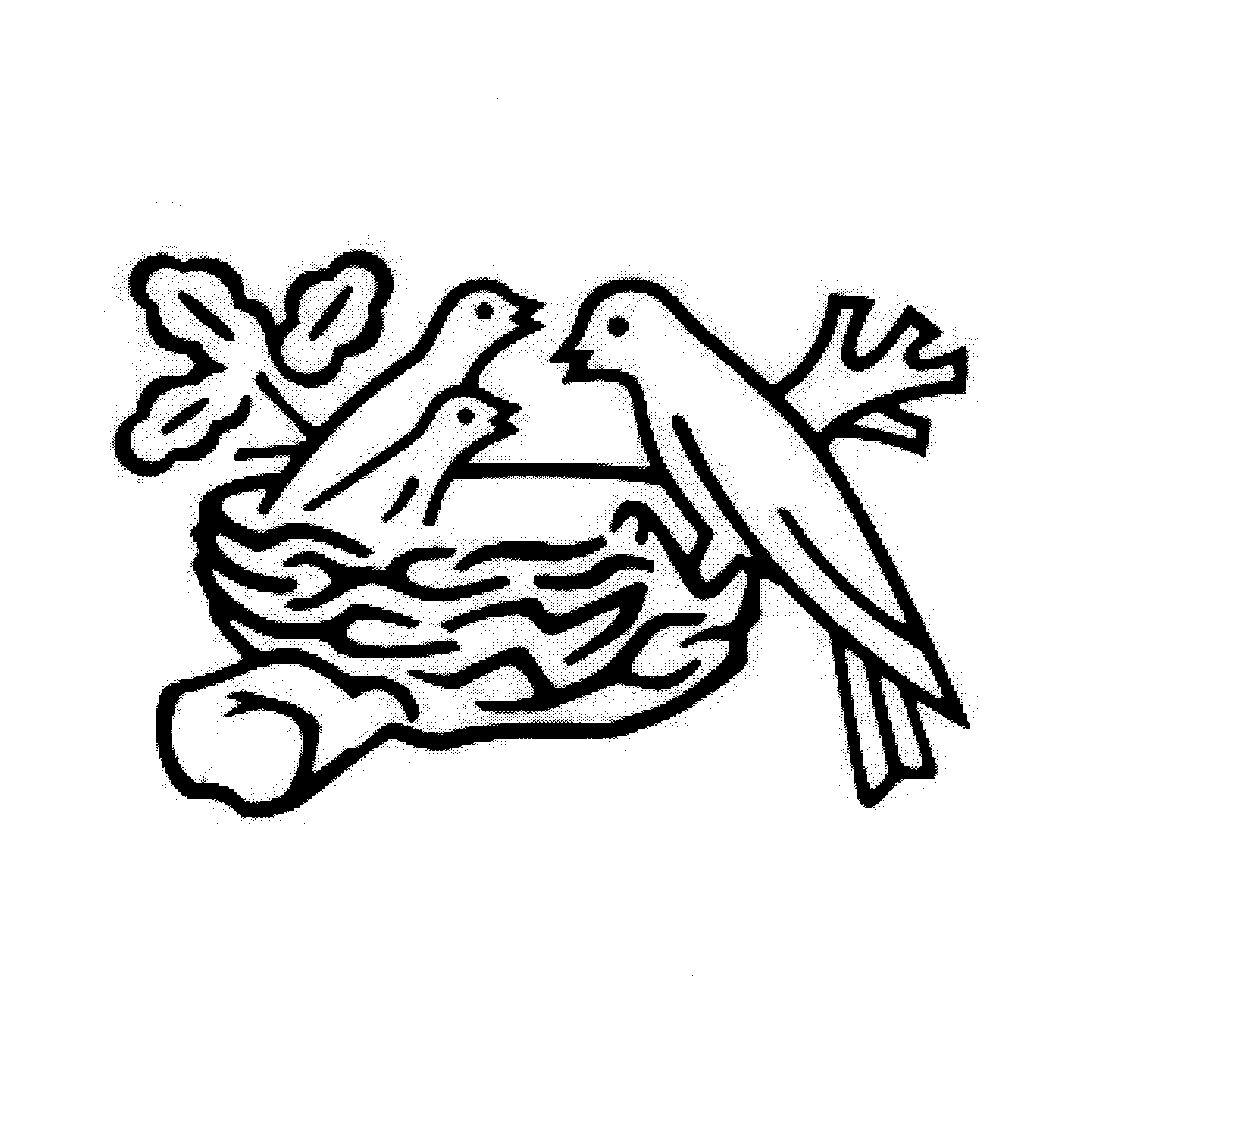 3 Birds in a Nest Logo - BIRDS IN NEST ON BRANCH by Societe Des Produits Nestle SA